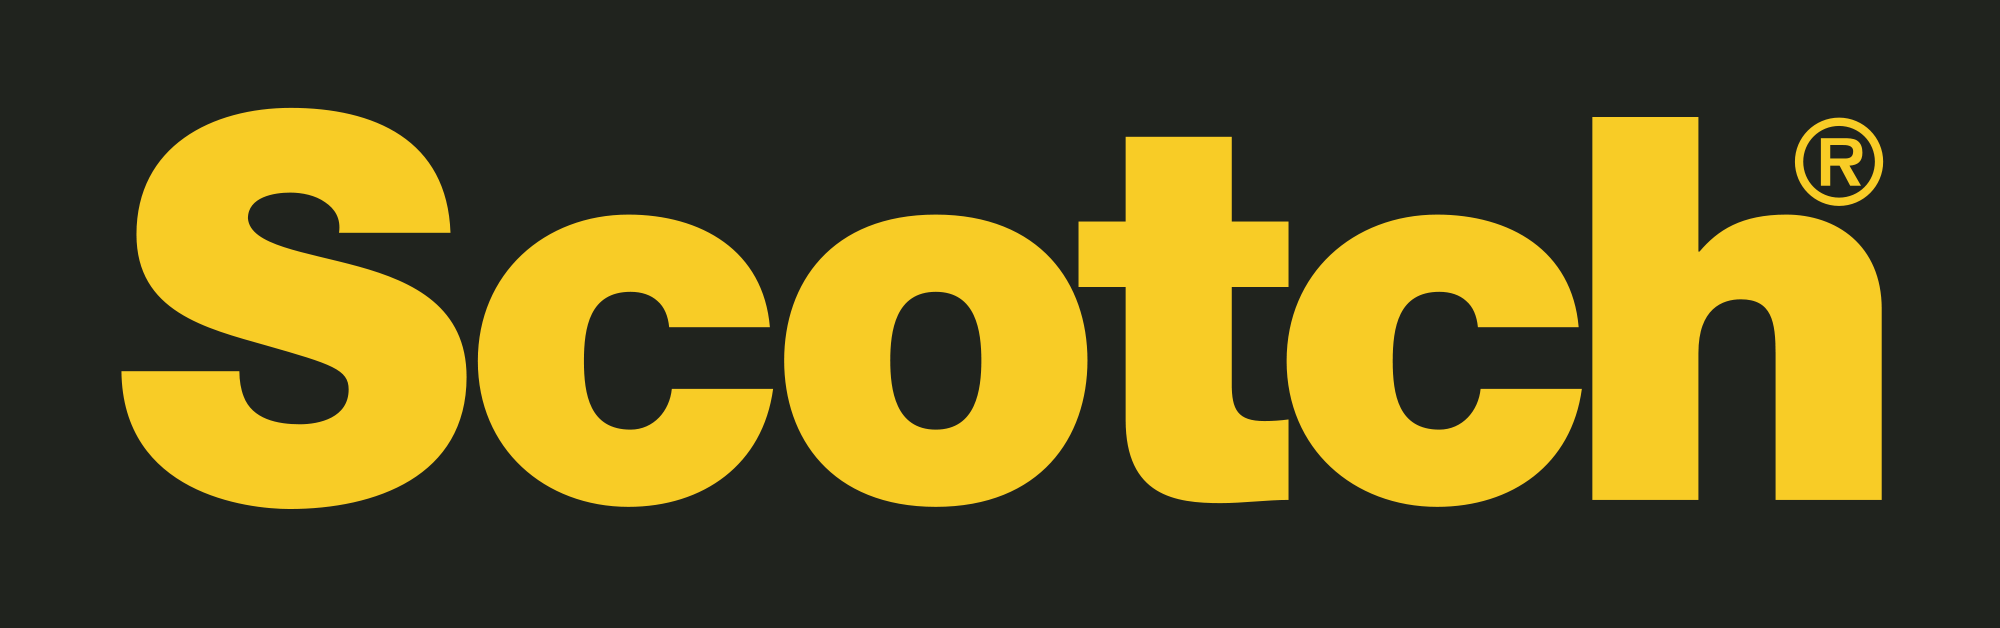 Scotch Logo - File:Scotch-logo.svg - Wikimedia Commons